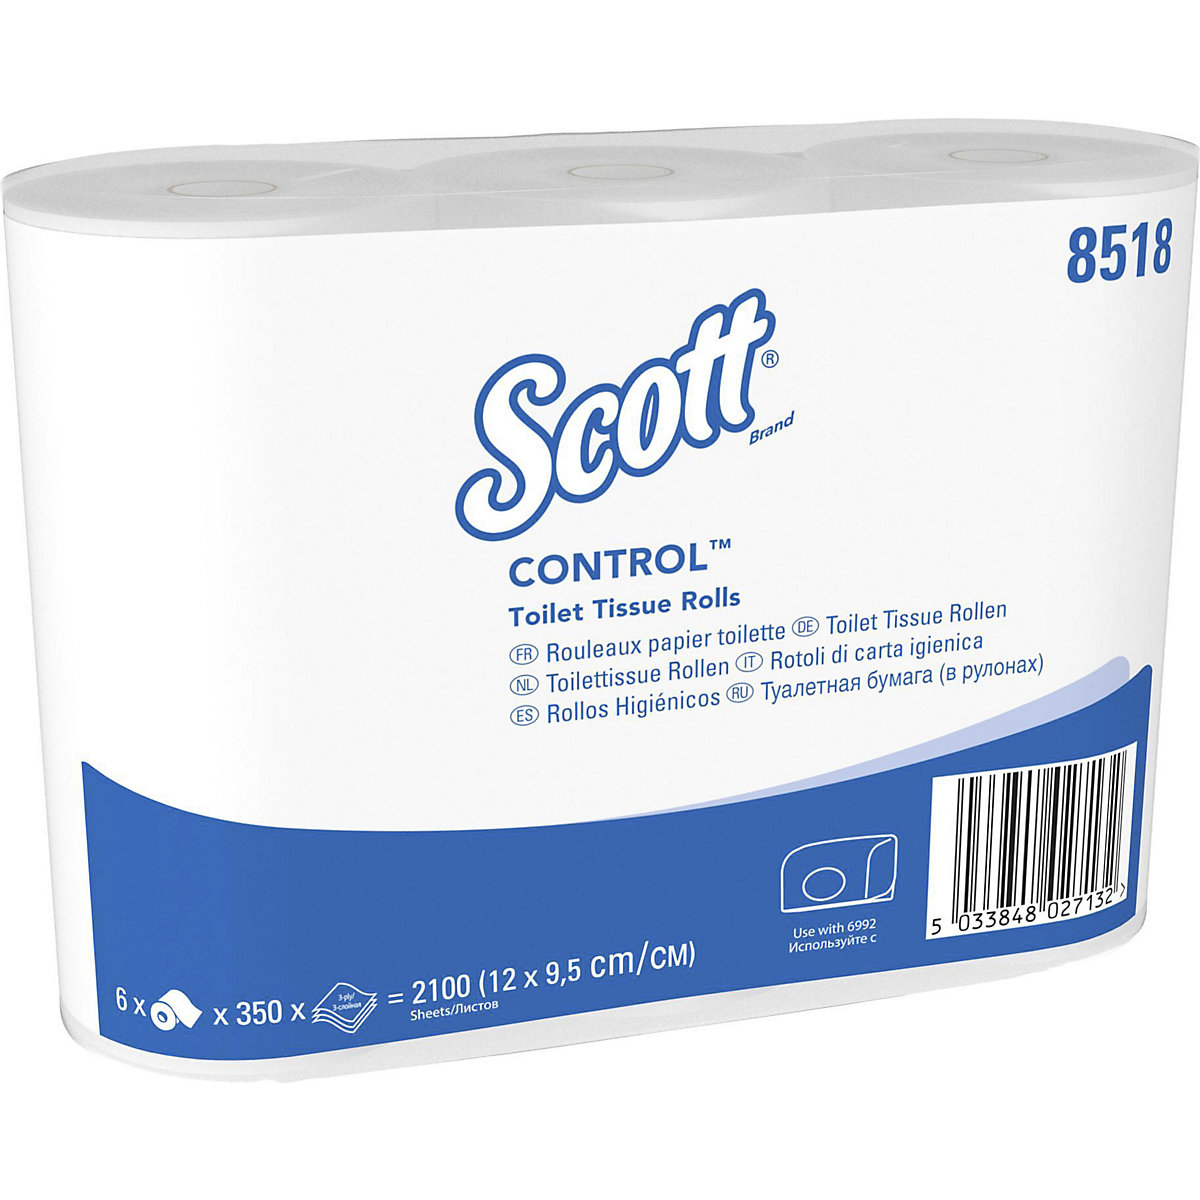 Standardni toaletni papir Scott® CONTROL™ – Kimberly-Clark